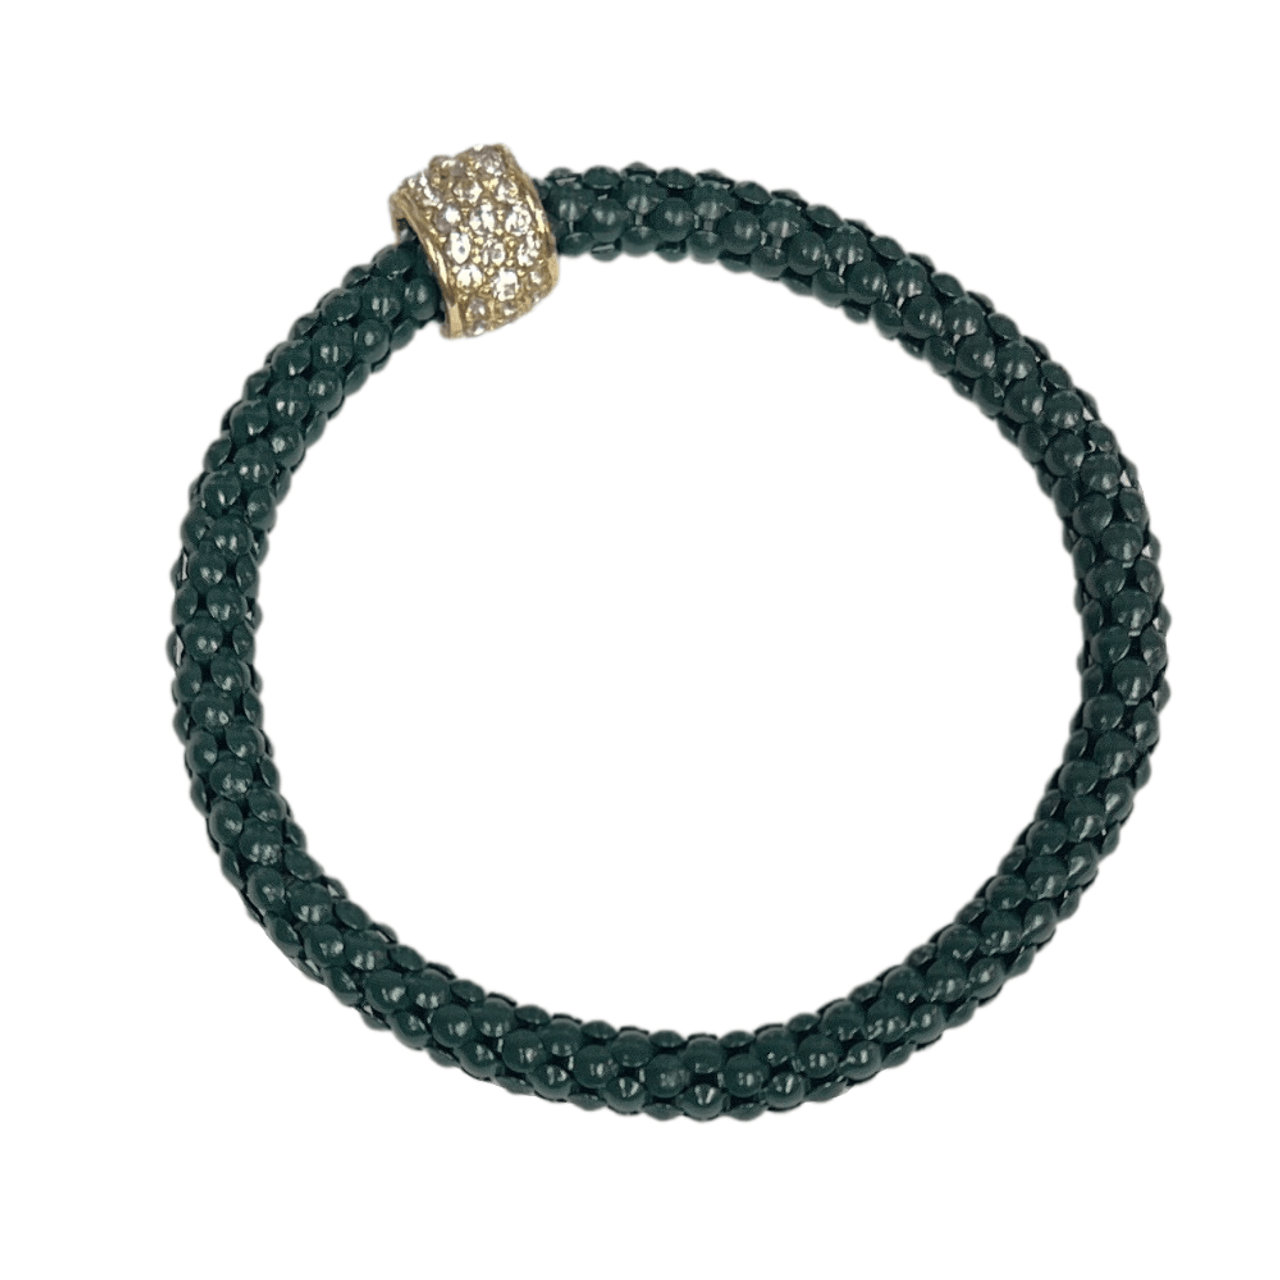 Lou & Co Stretch Snake Chain Bracelet Green